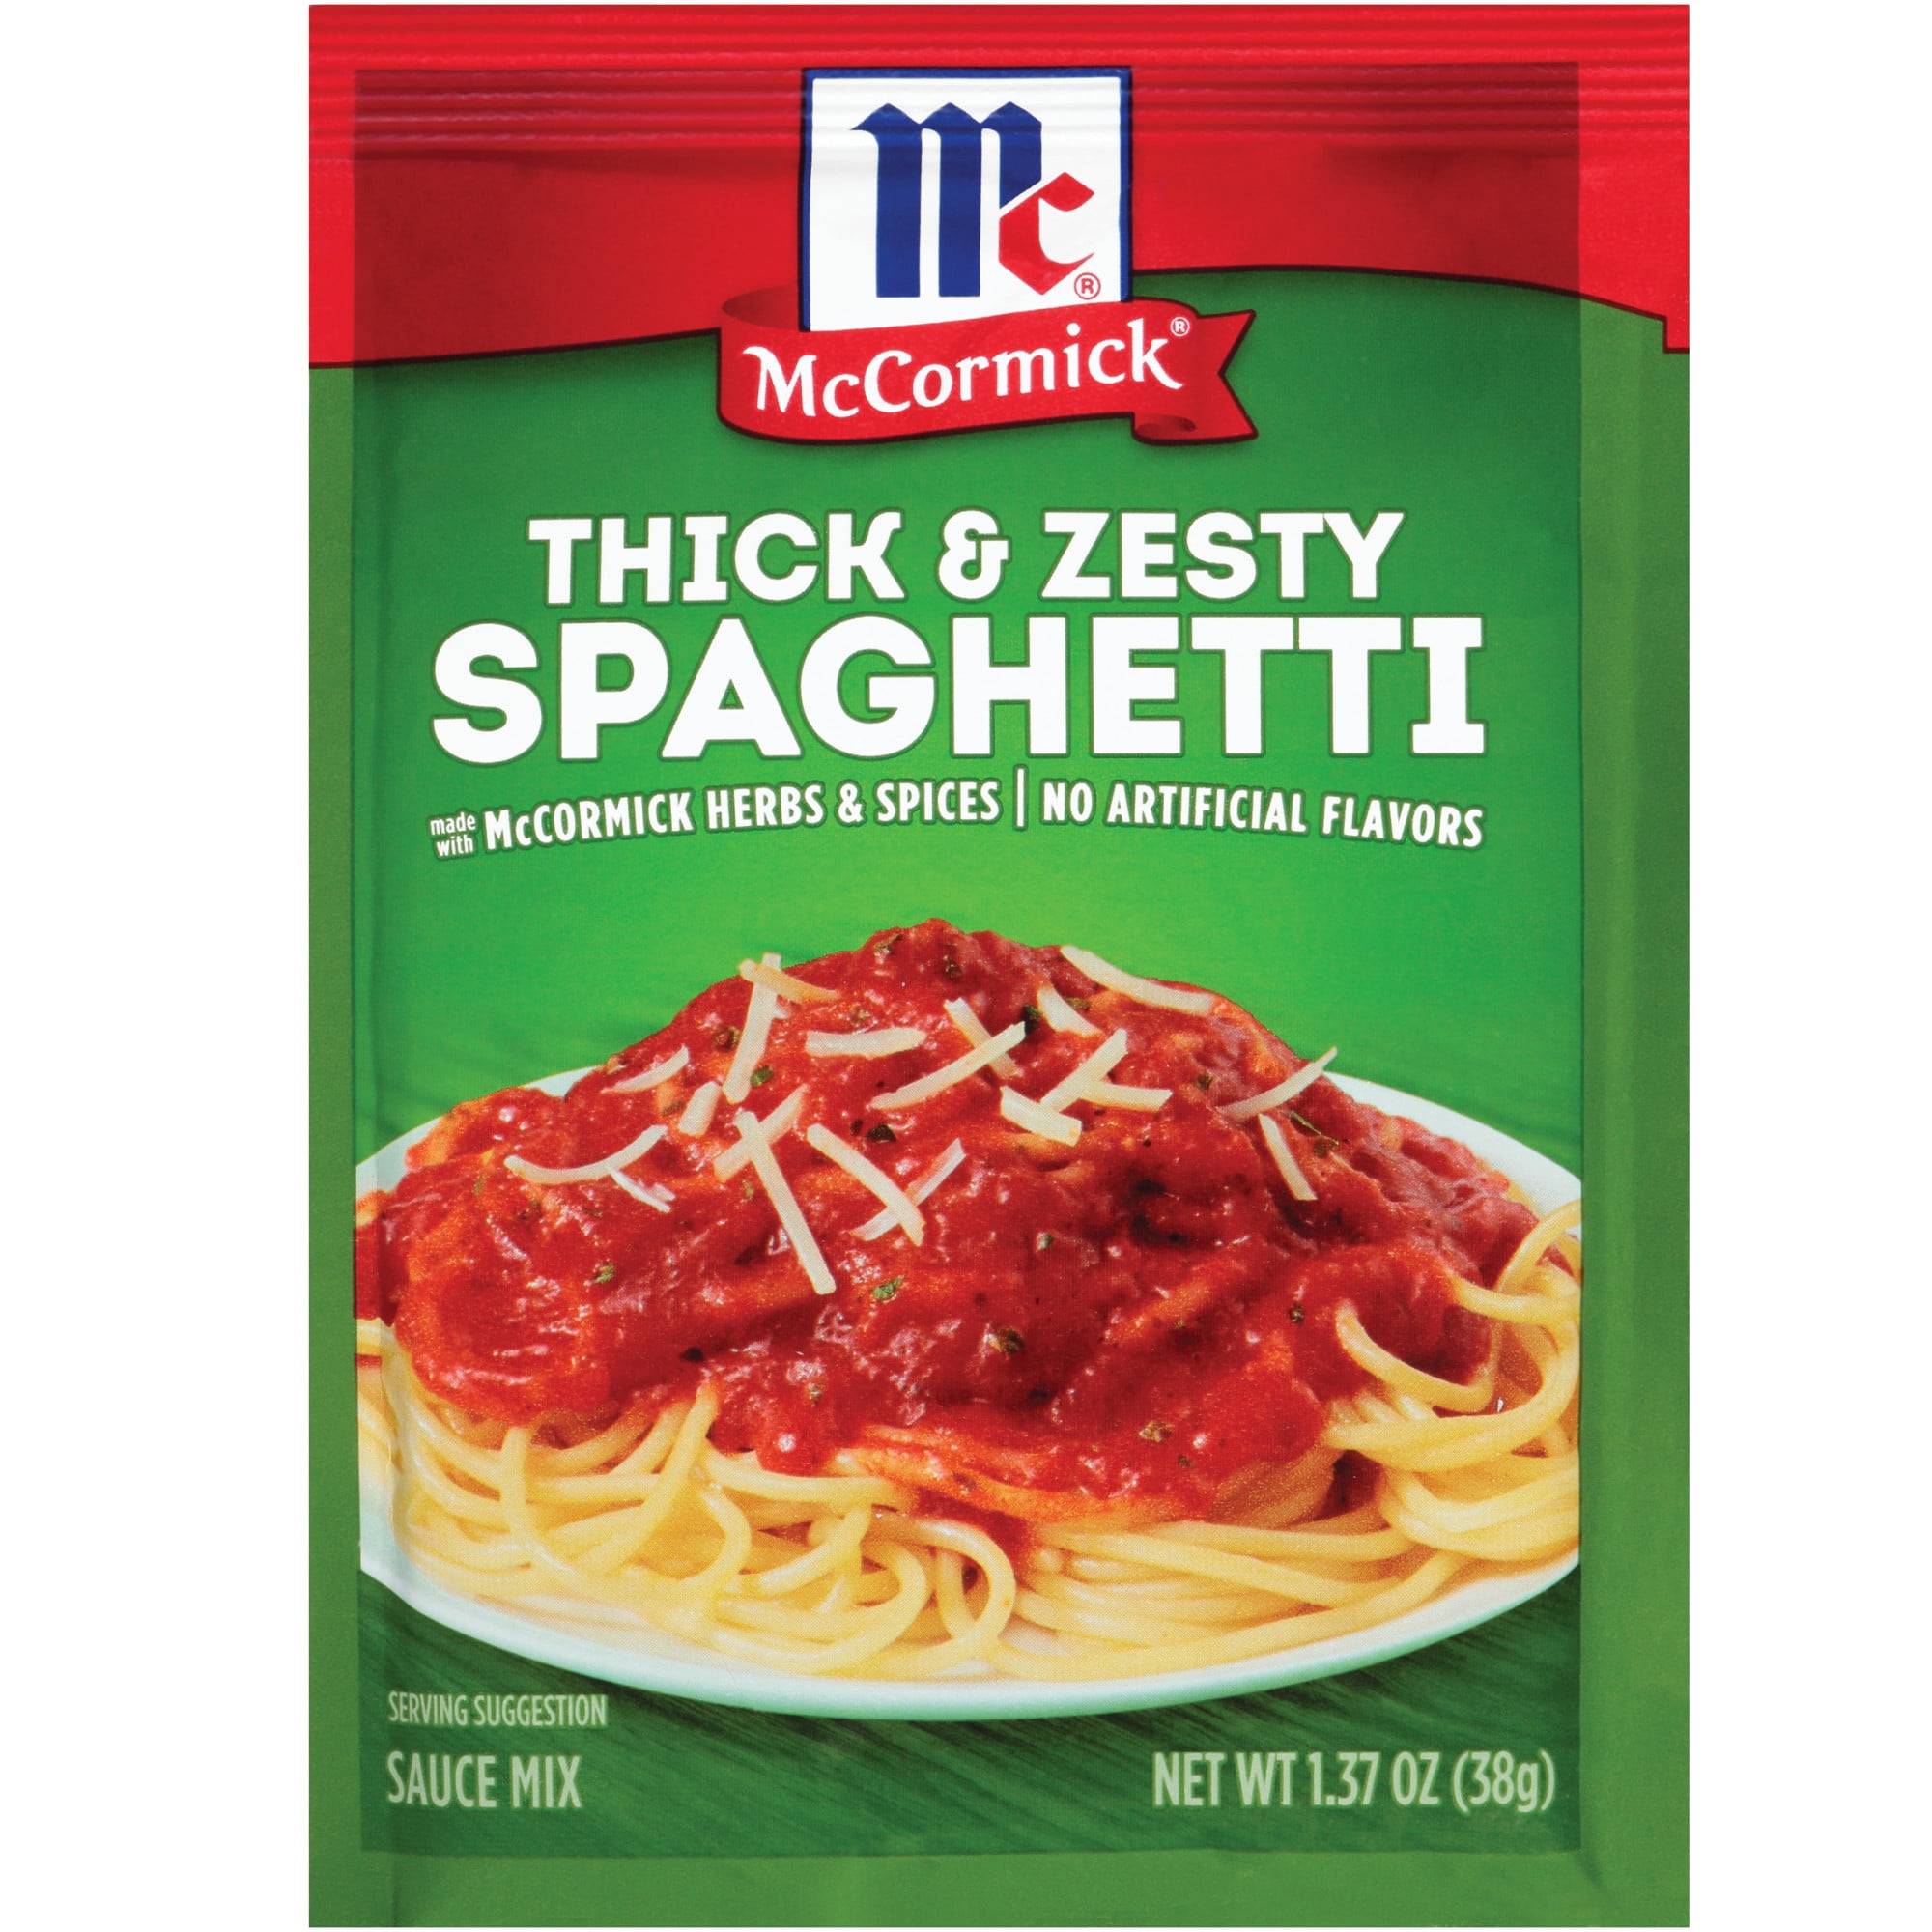 McCormick Thick & Zesty Spaghetti Sauce Mix, 1.37 oz